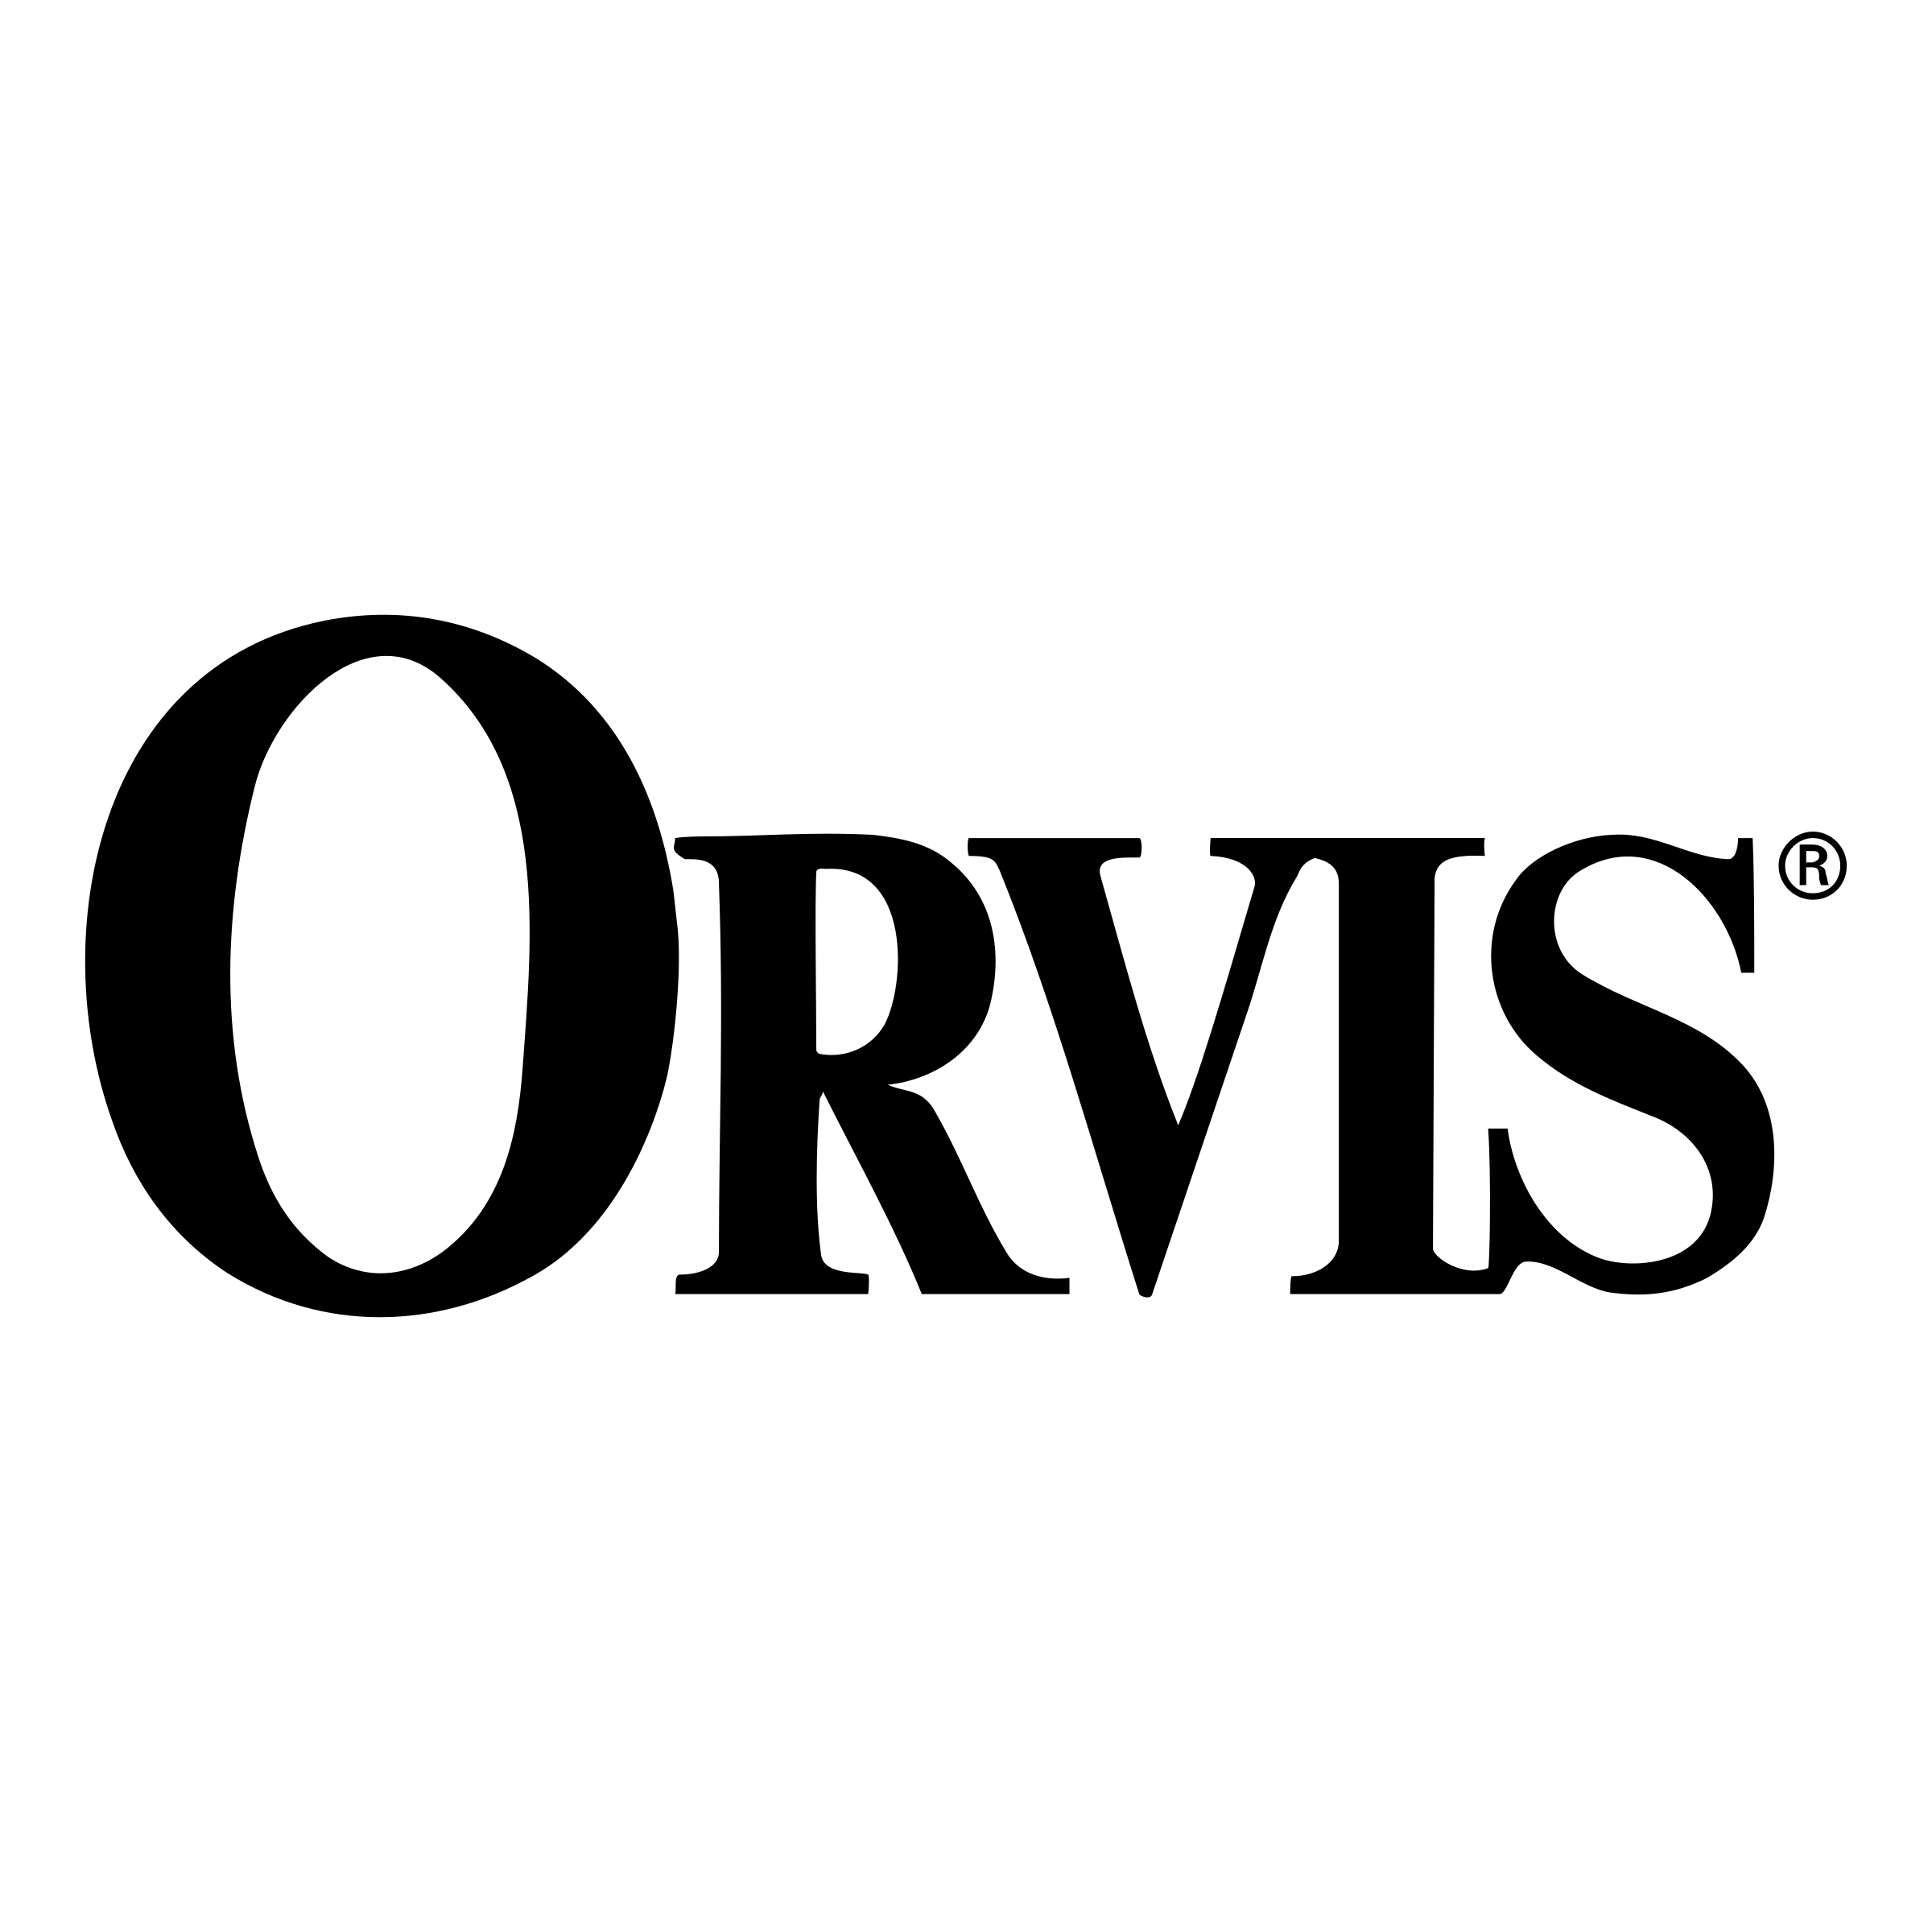 Orvis Logo - Orvis Logo PNG Transparent & SVG Vector - Freebie Supply